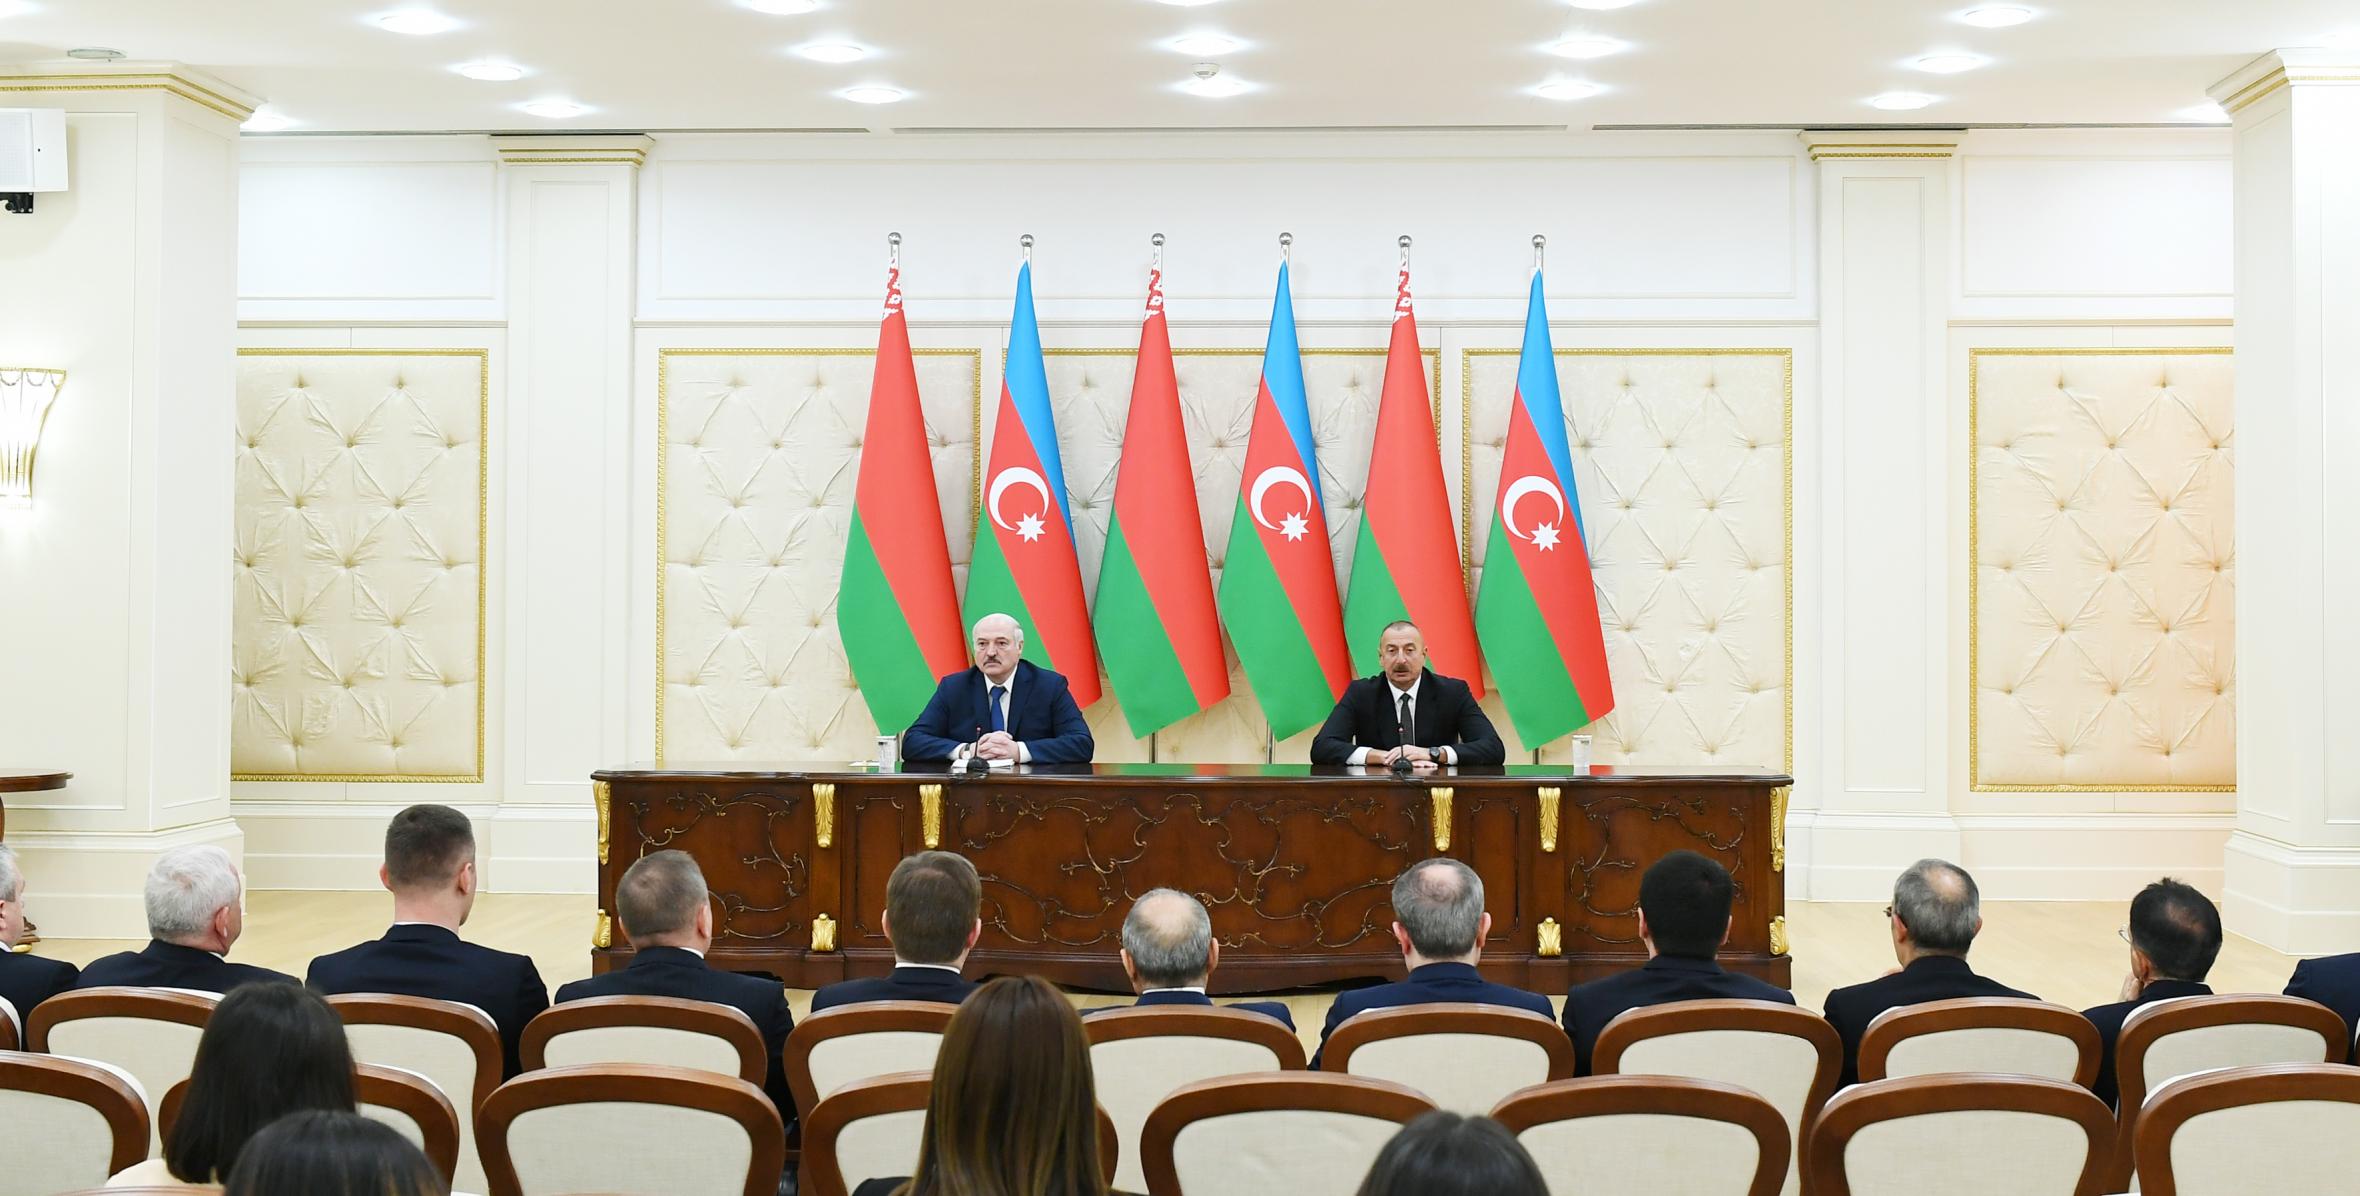 Presidents of Azerbaijani and Belarus made press statements